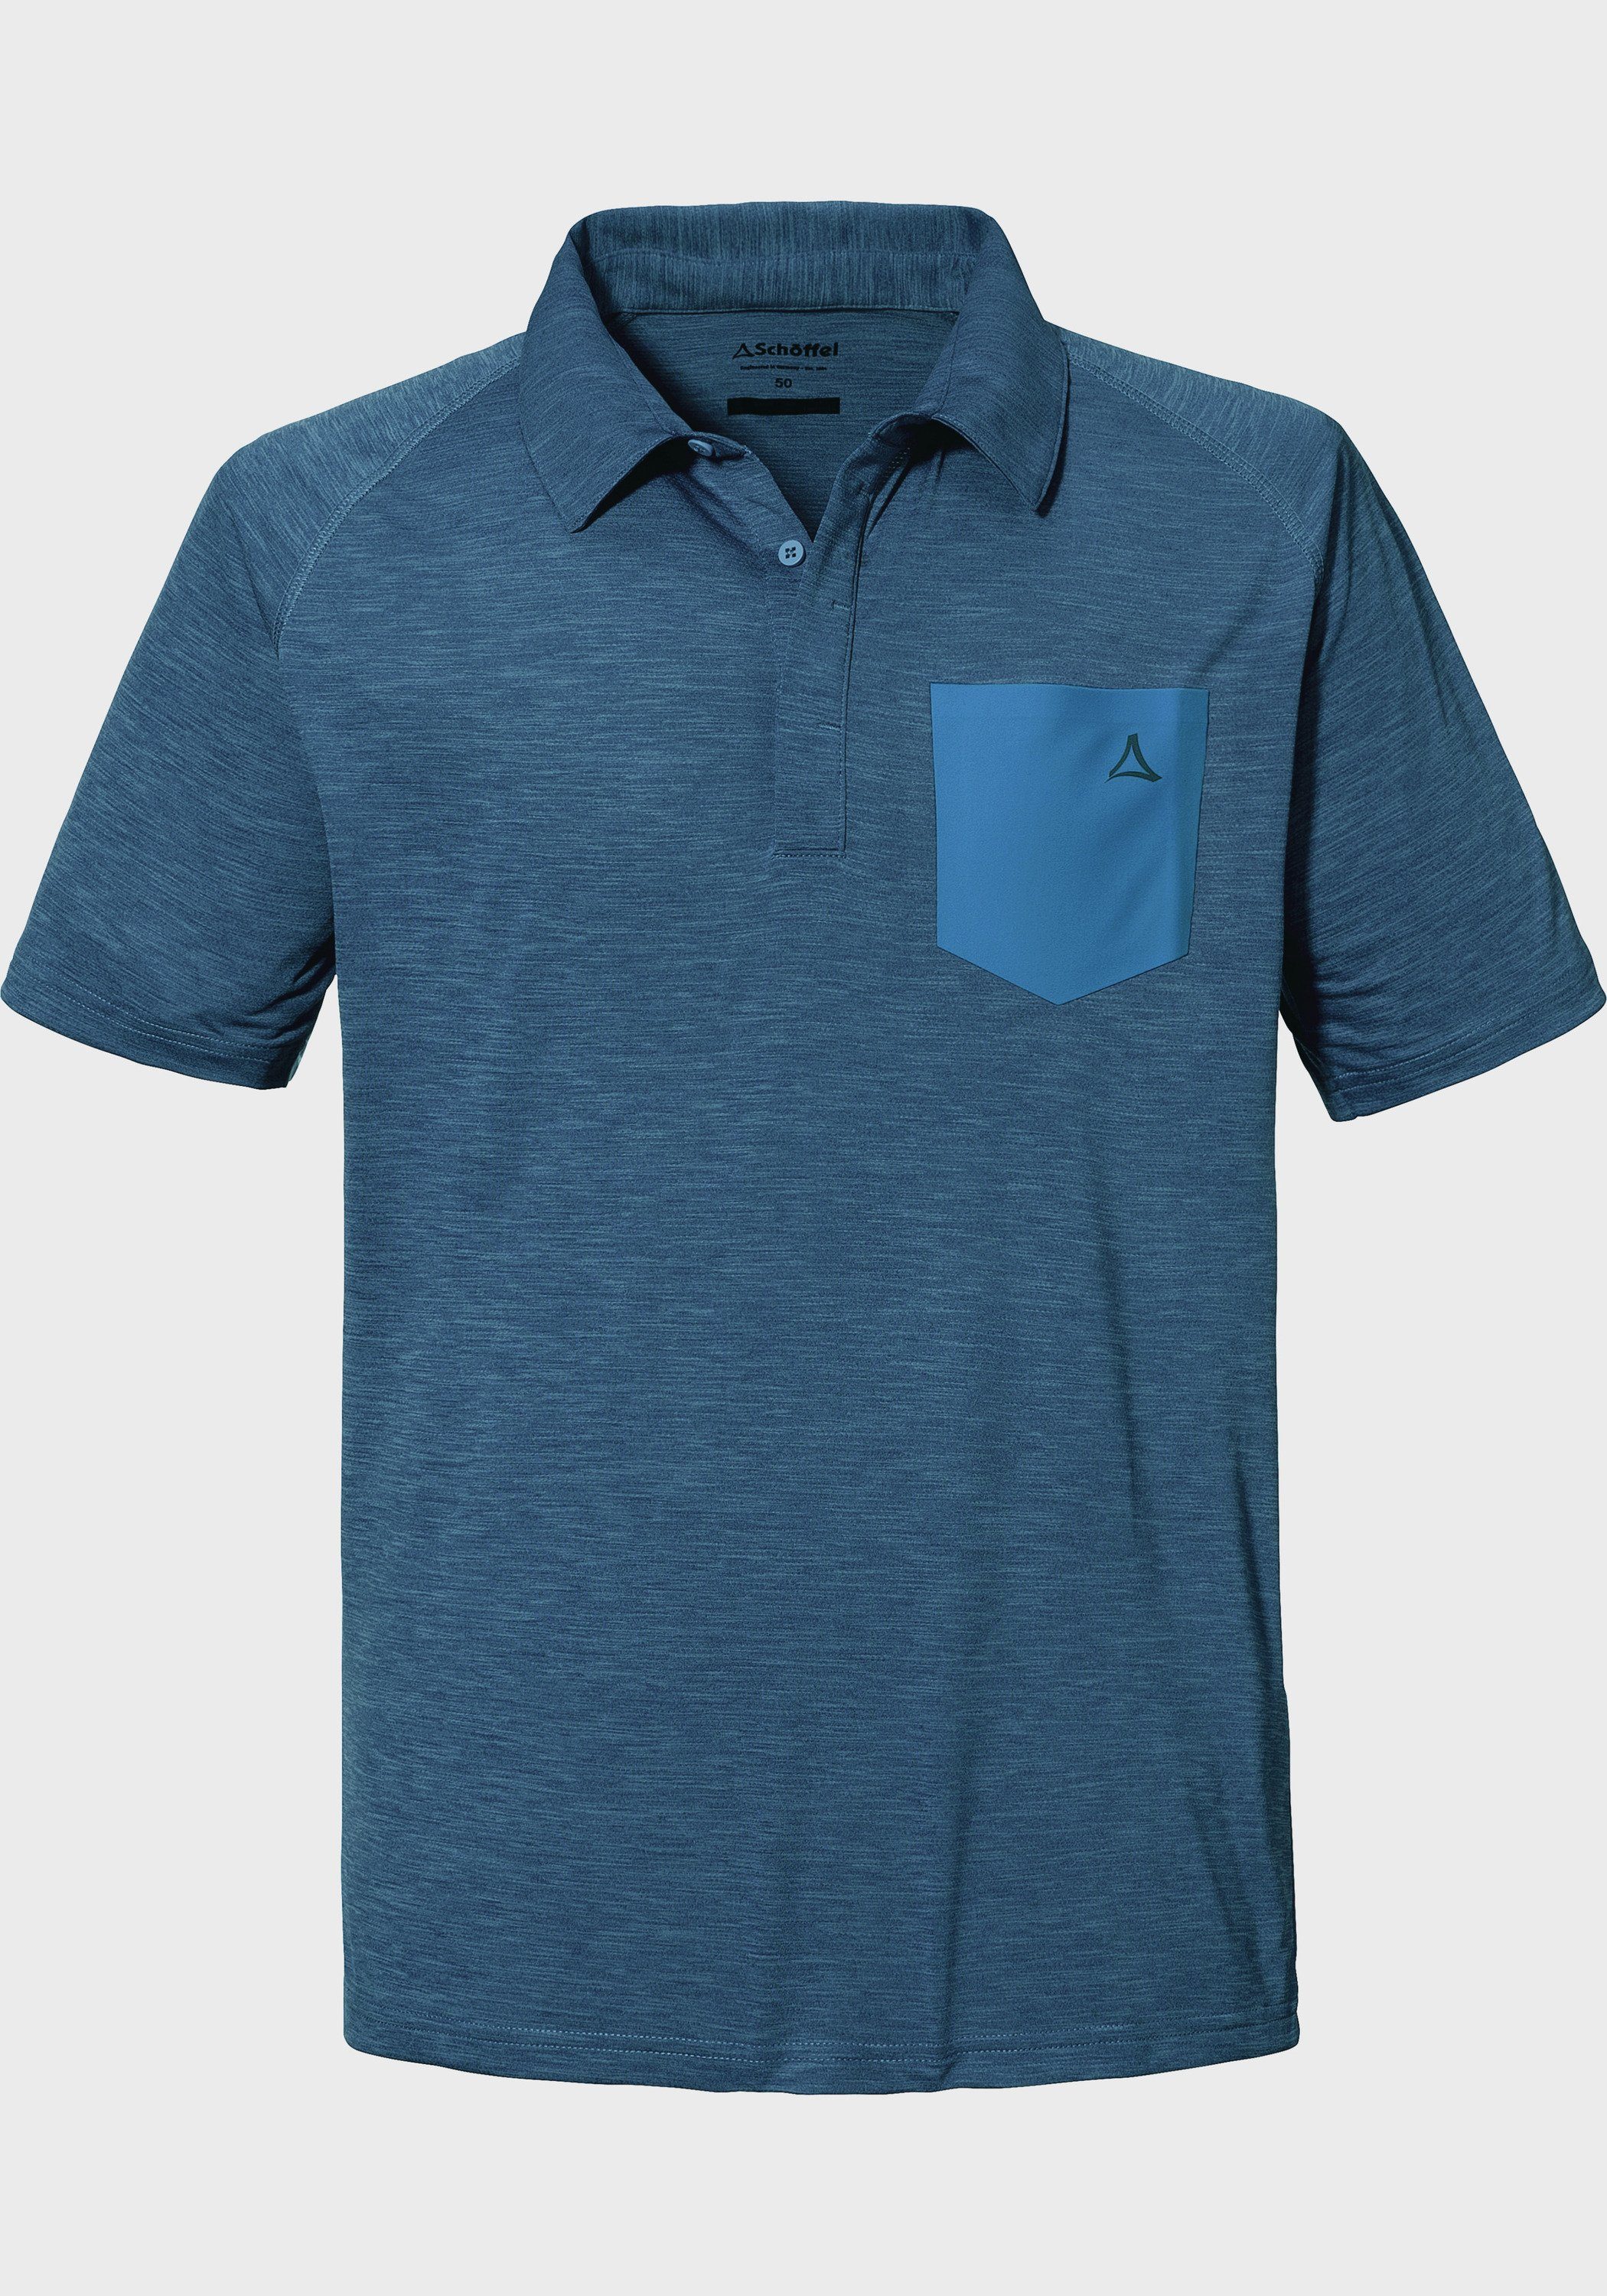 Poloshirt Hocheck Polo blau Schöffel Shirt M